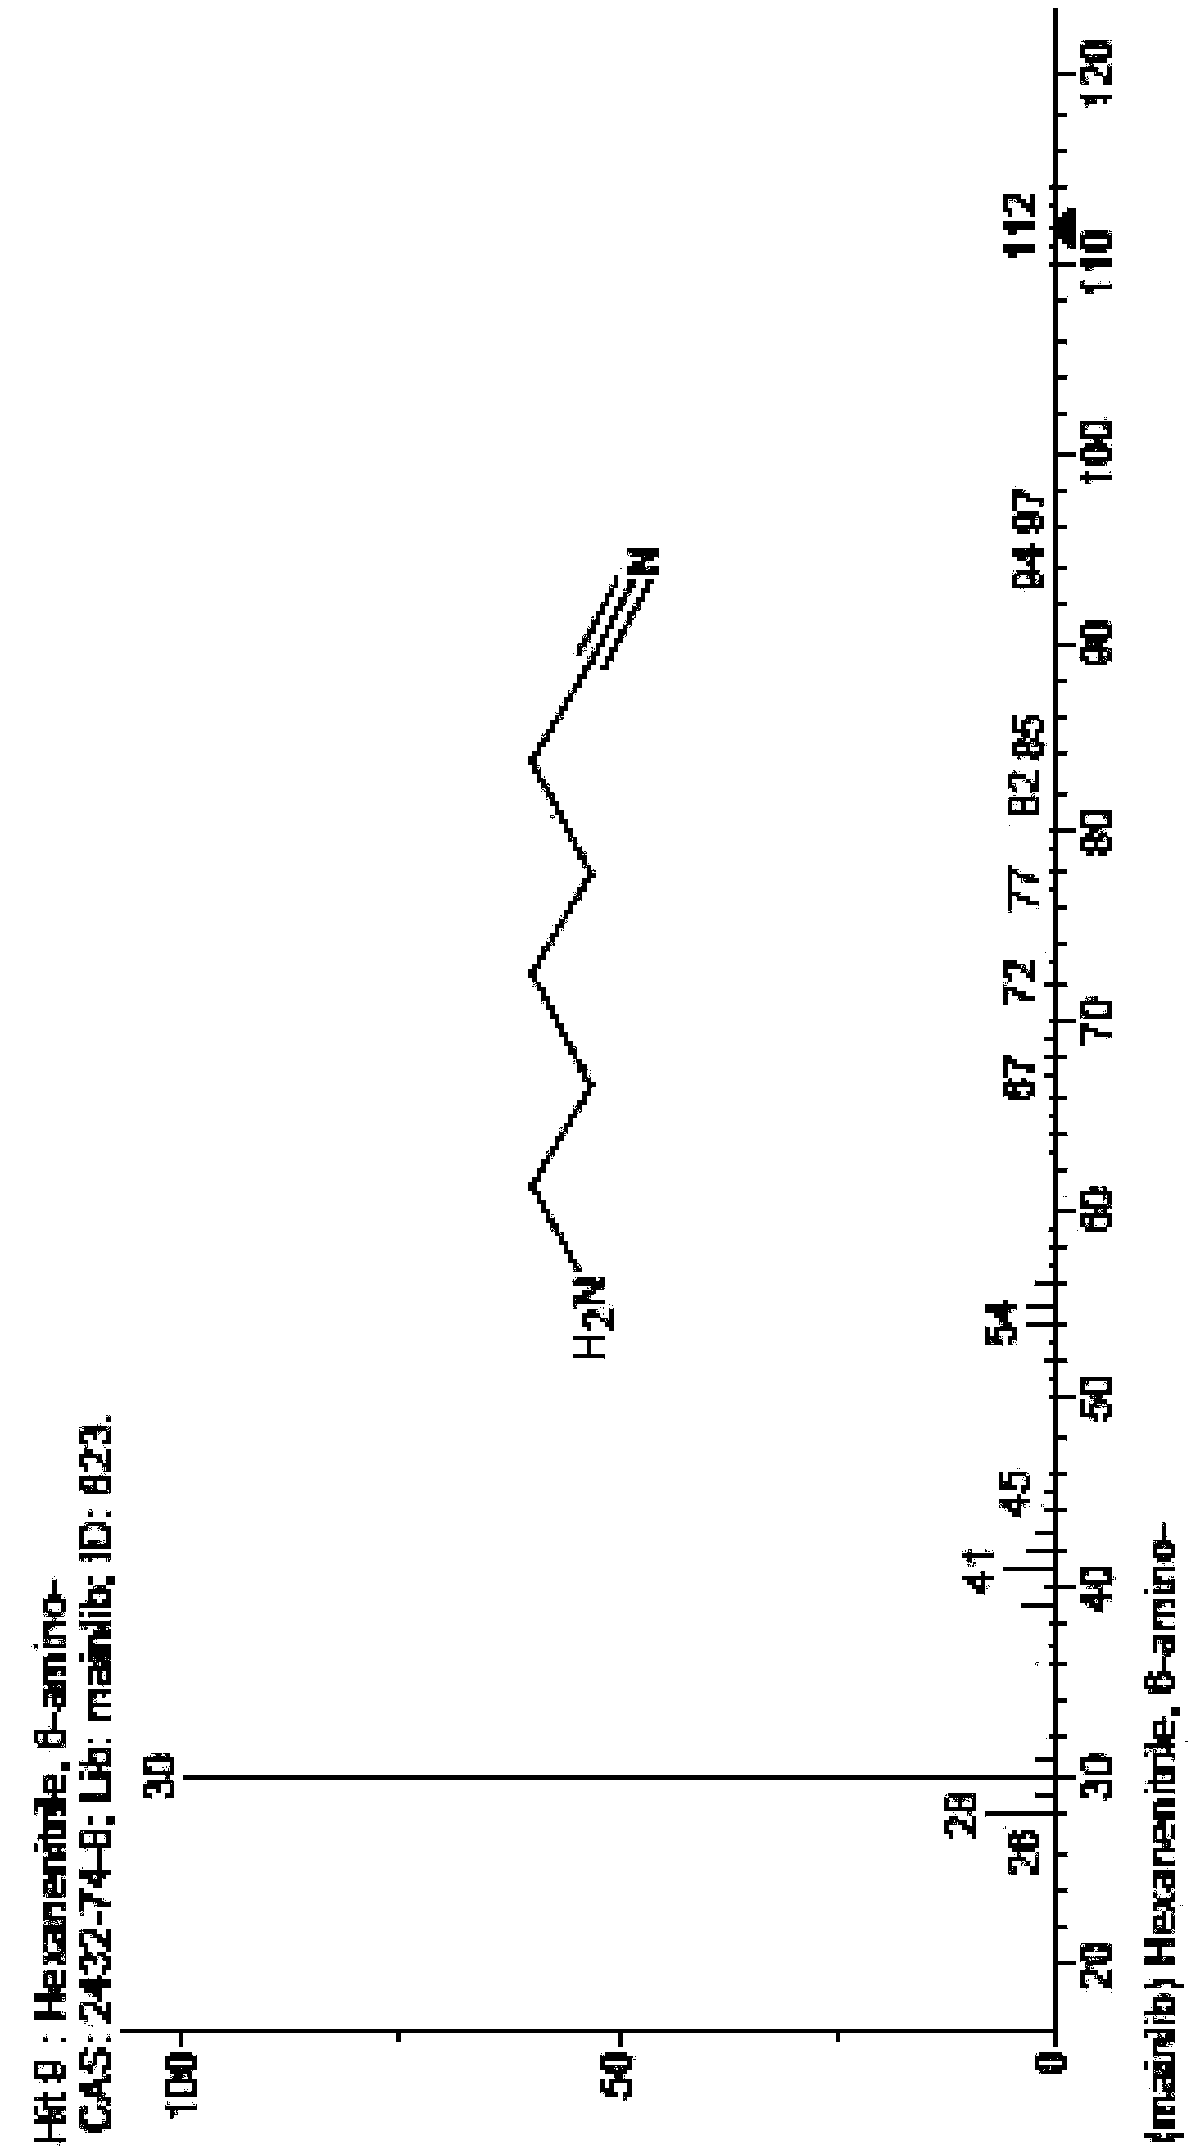 Method for preparing 6-aminocapronitrile by gas phase method